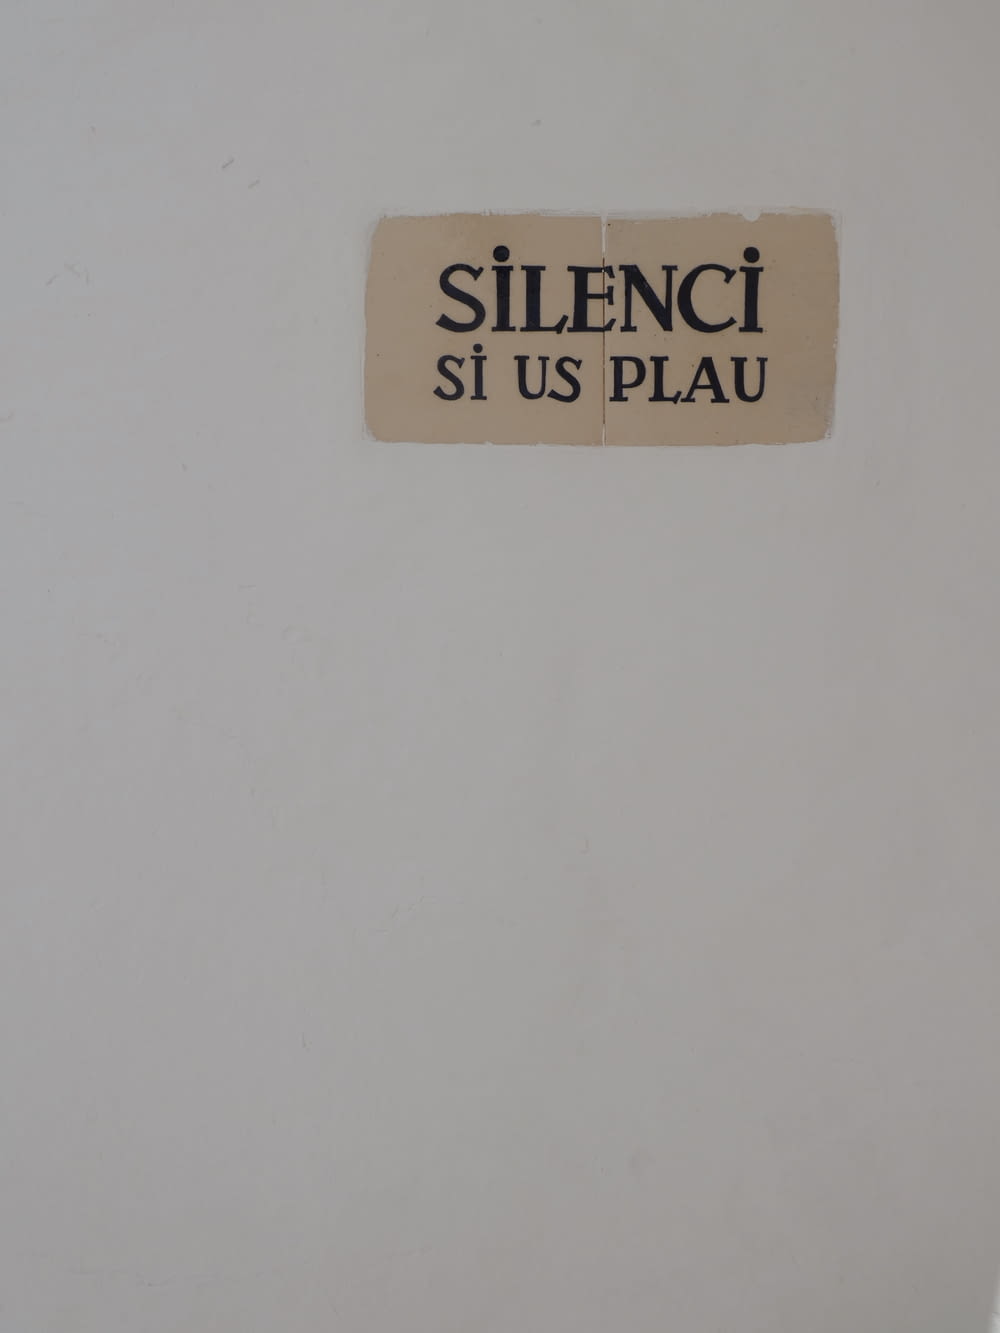 silenci si us plau signage